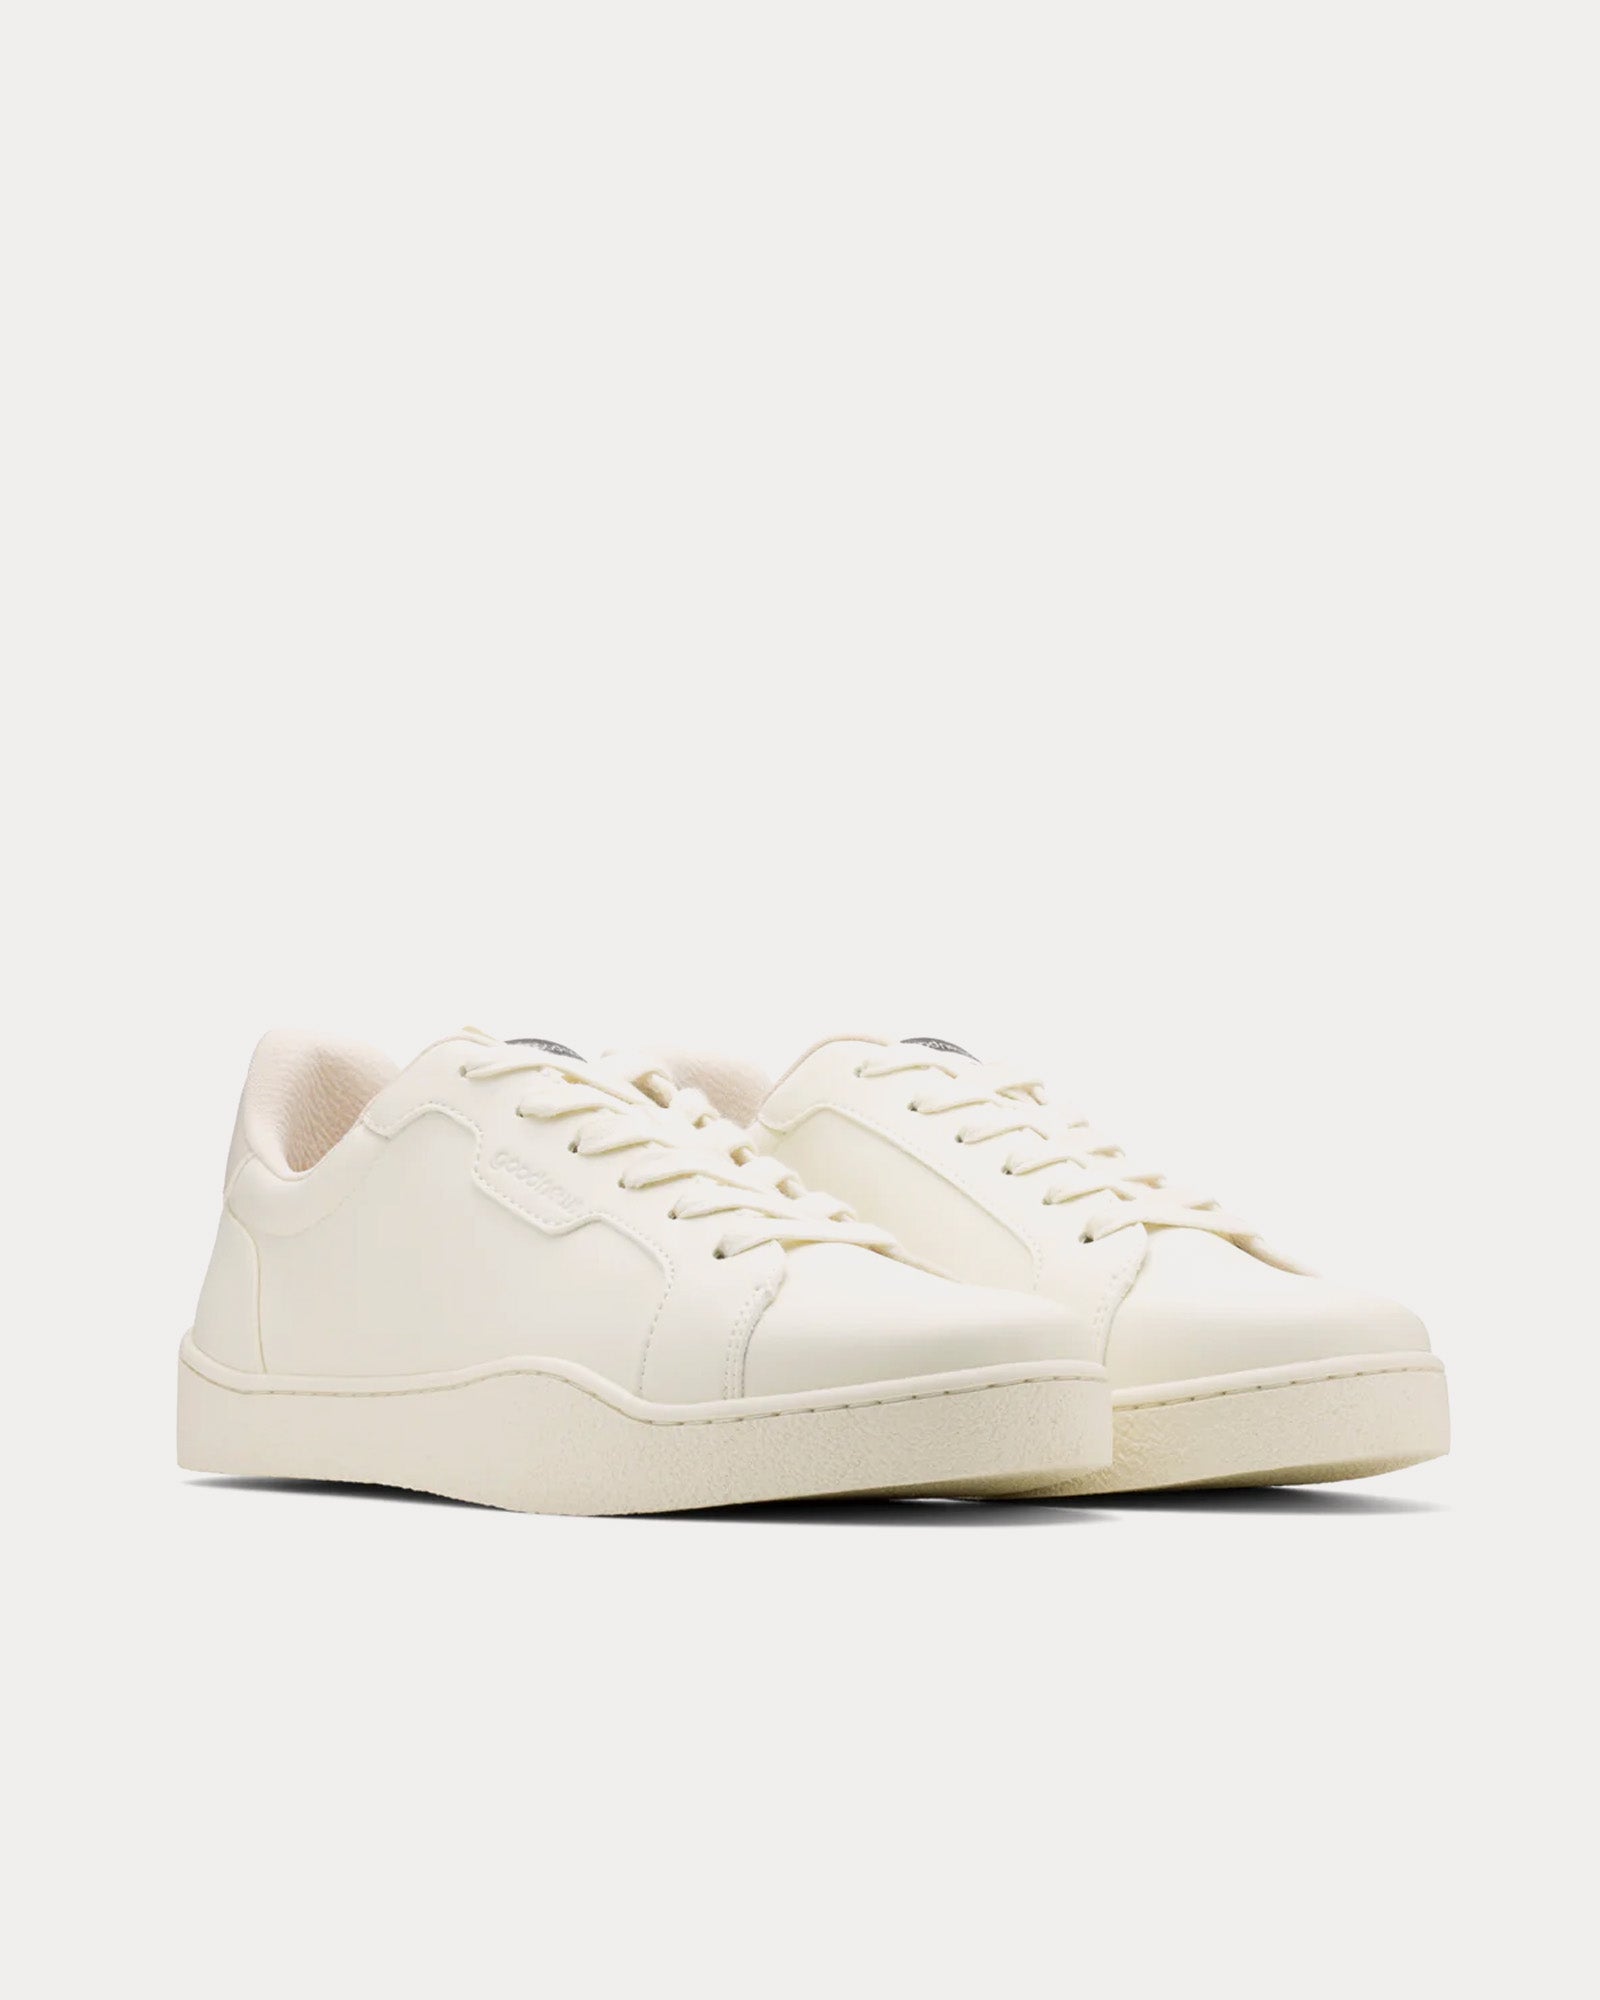 Good News - Venus White Low Top Sneakers